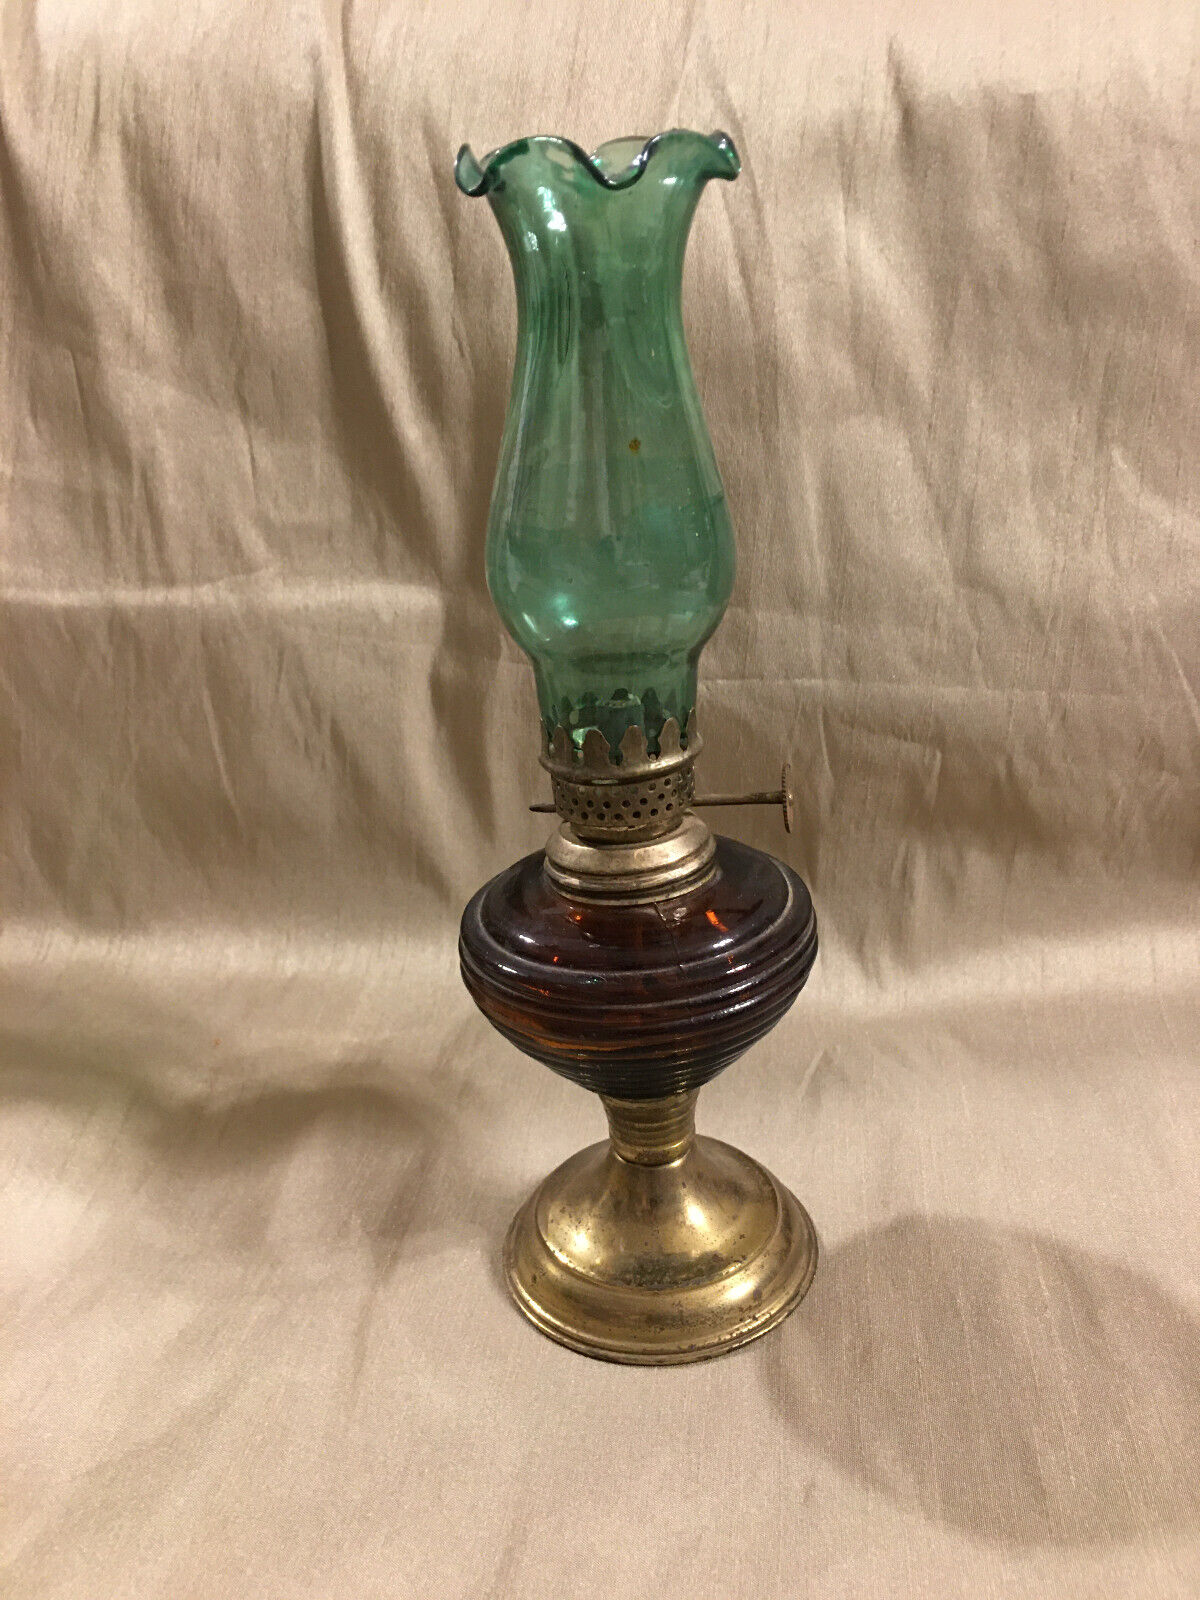 Vintage small glass oil lamp - amber glass and green chimney oil kerosine -works